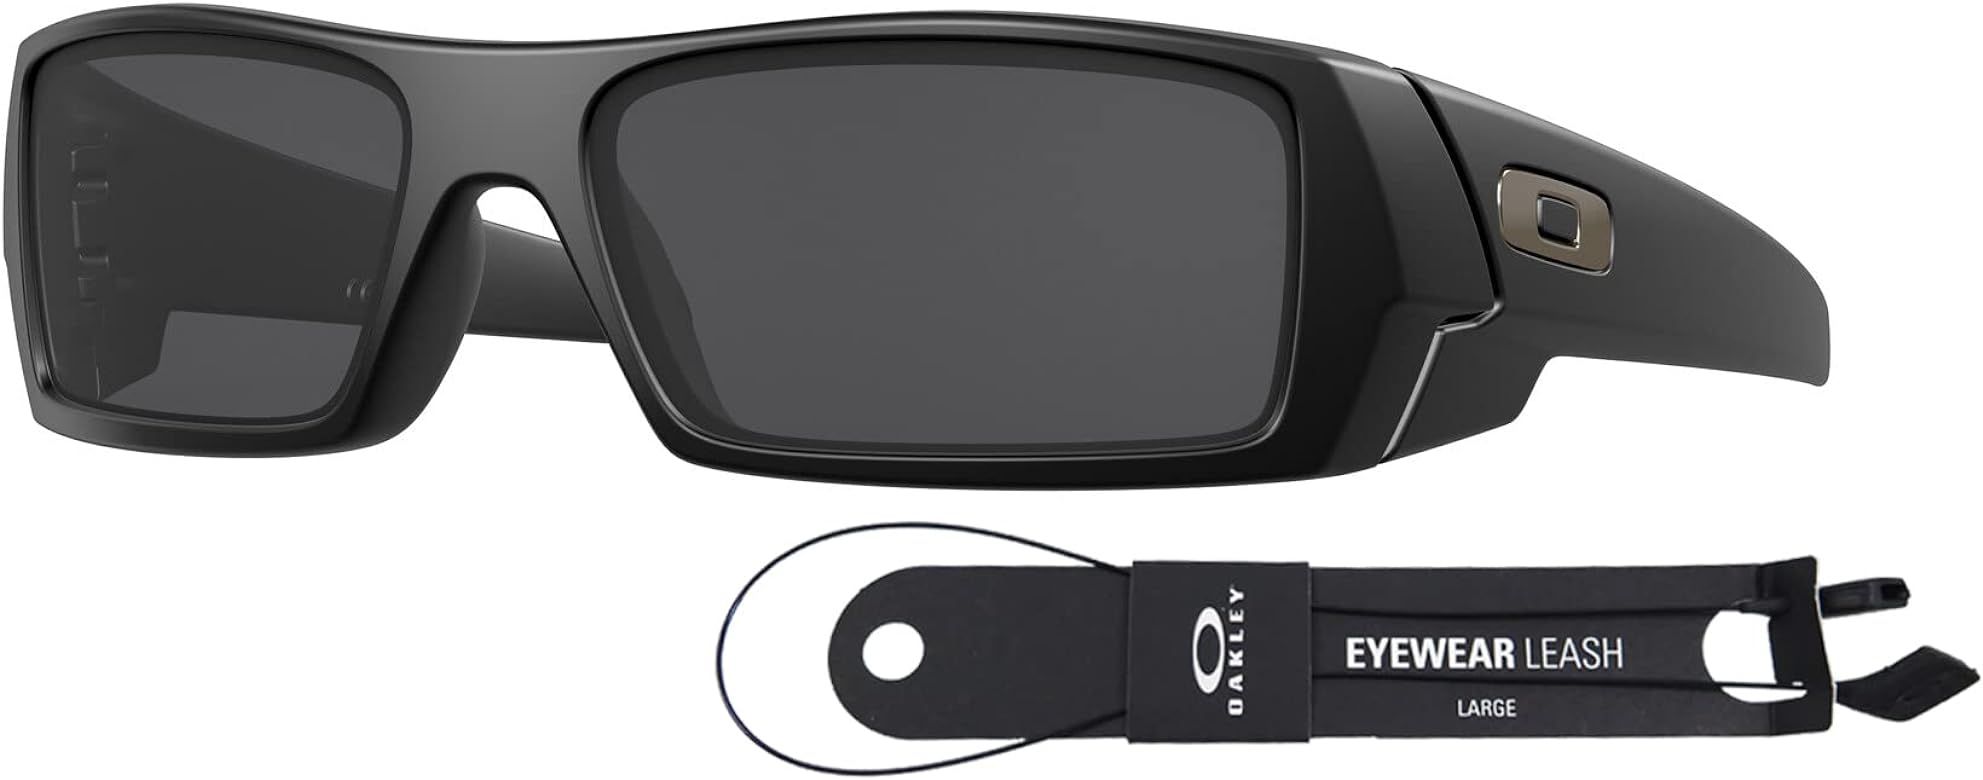 Oakley Gascan OO9014 Sunglasses For Men Bundle + Oakley Leash + VISIOVA Accessories | Amazon (US)